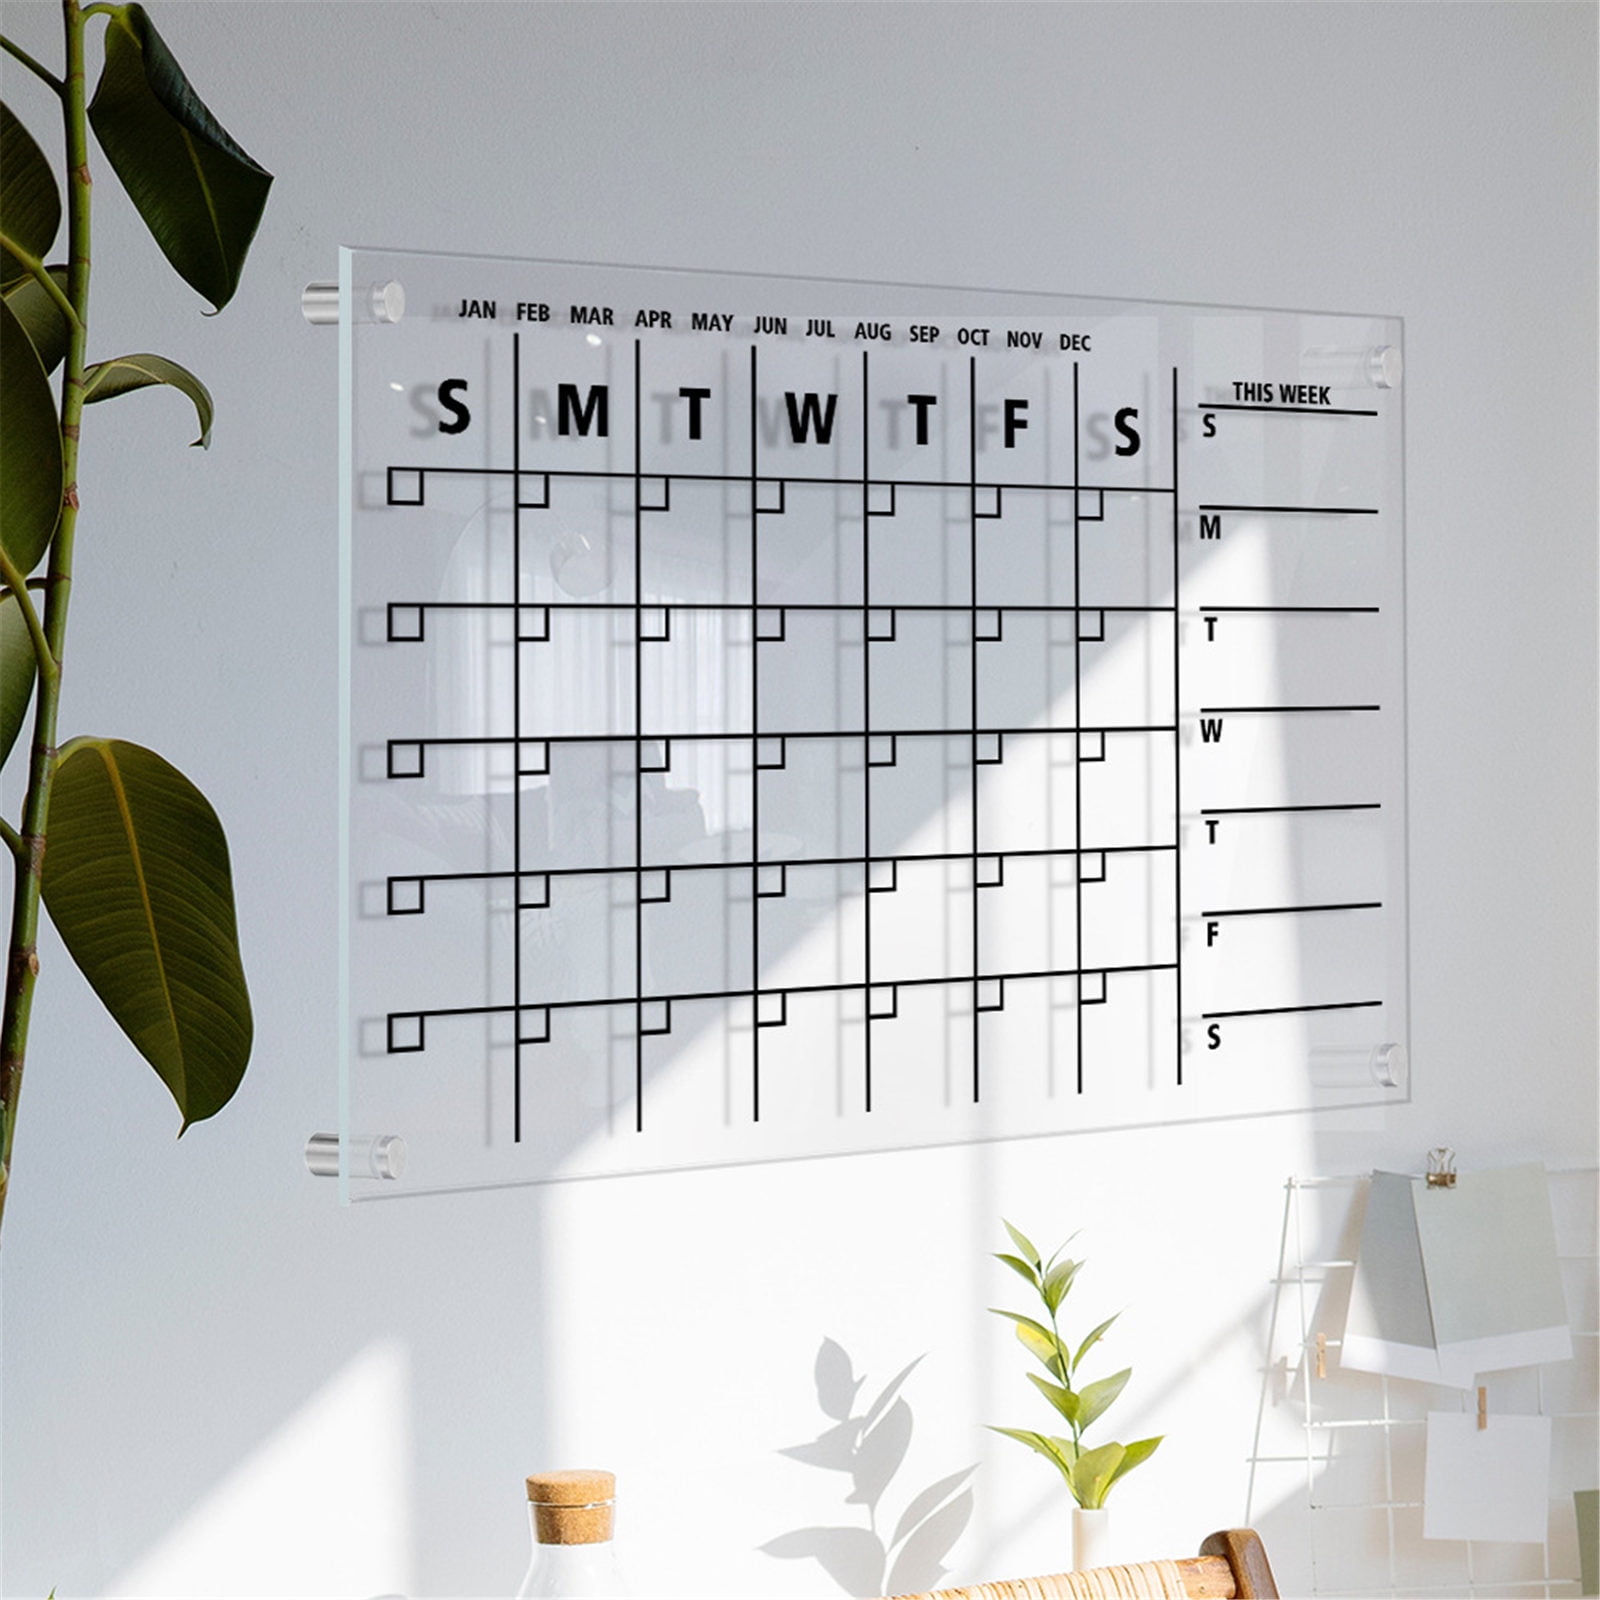 Wall Acrylic Weekly Planner Board Clear Dry Erases Calendar